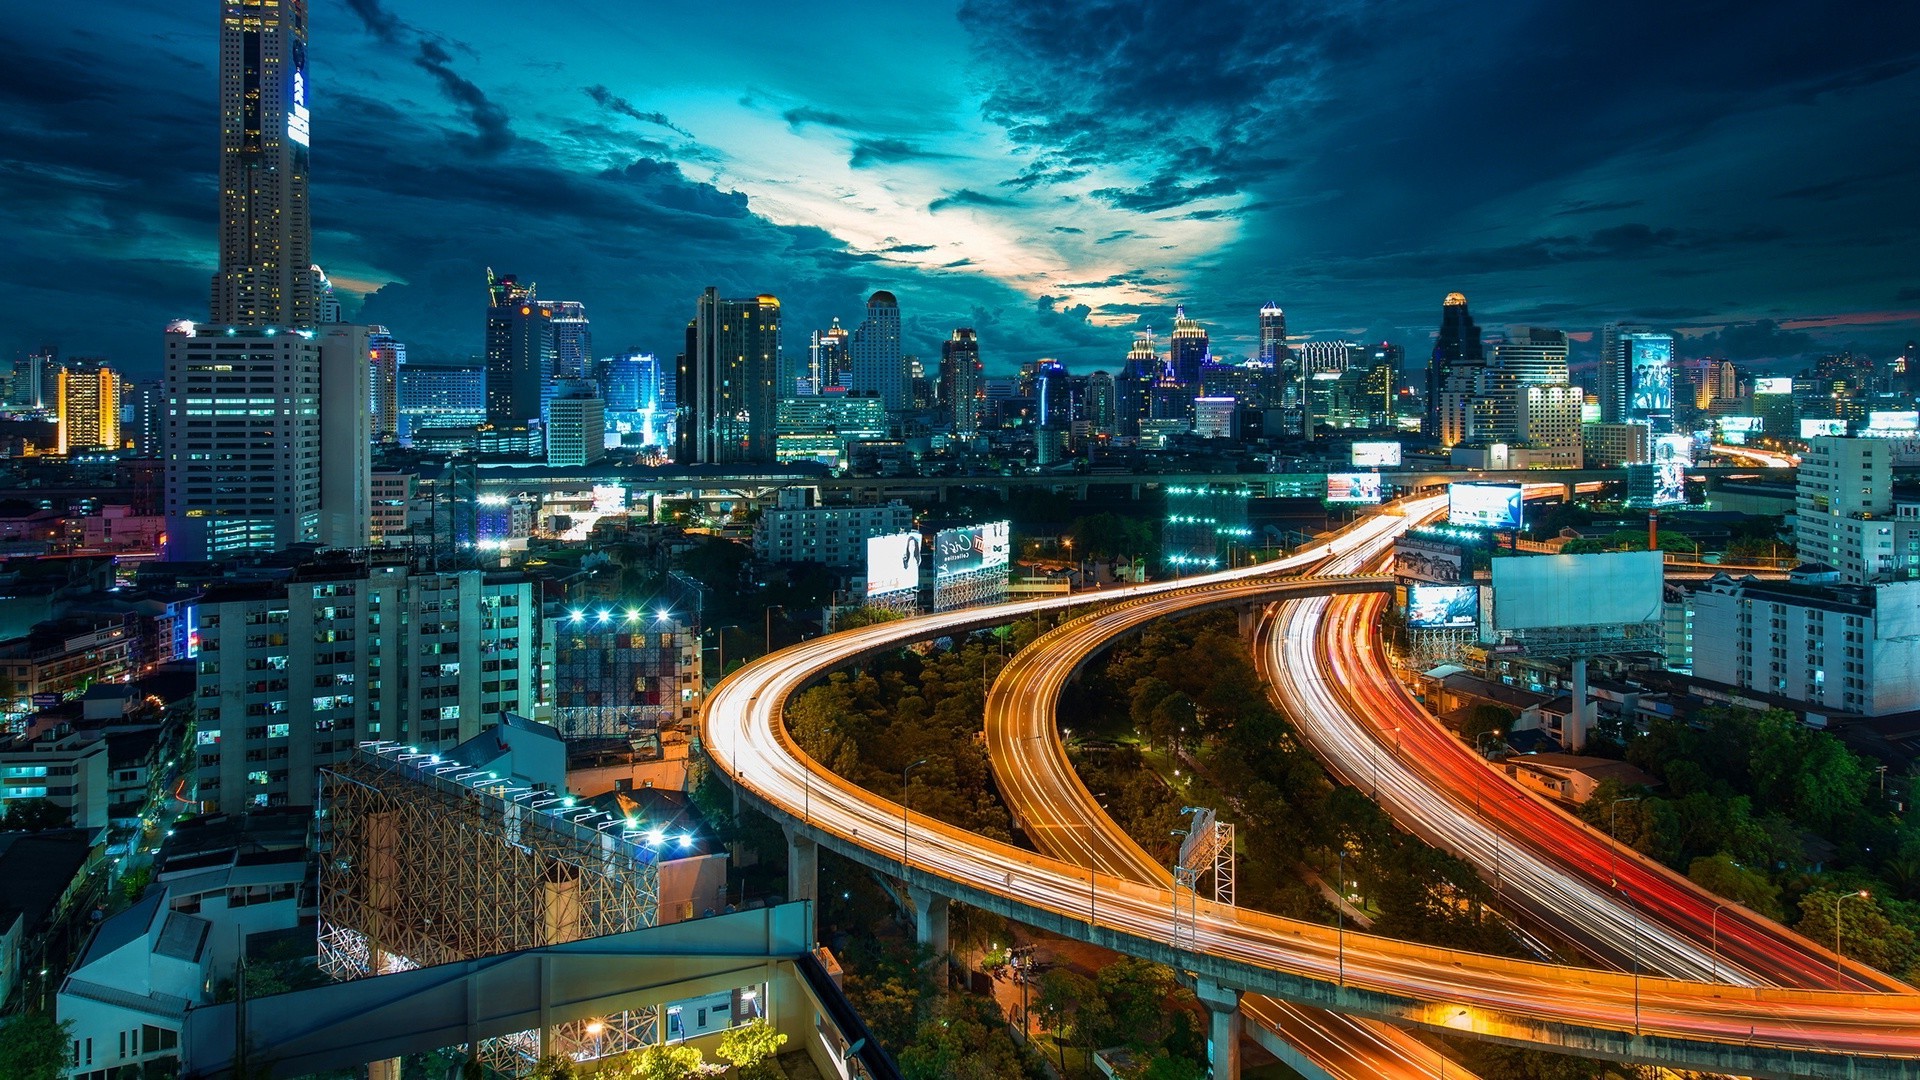 Thailand, Thai, Bangkok, City, Town, Road, Landscape, Building, Architecture, Night, Lights, Street, Sky, Blue, Orange, Clouds Wallpaper